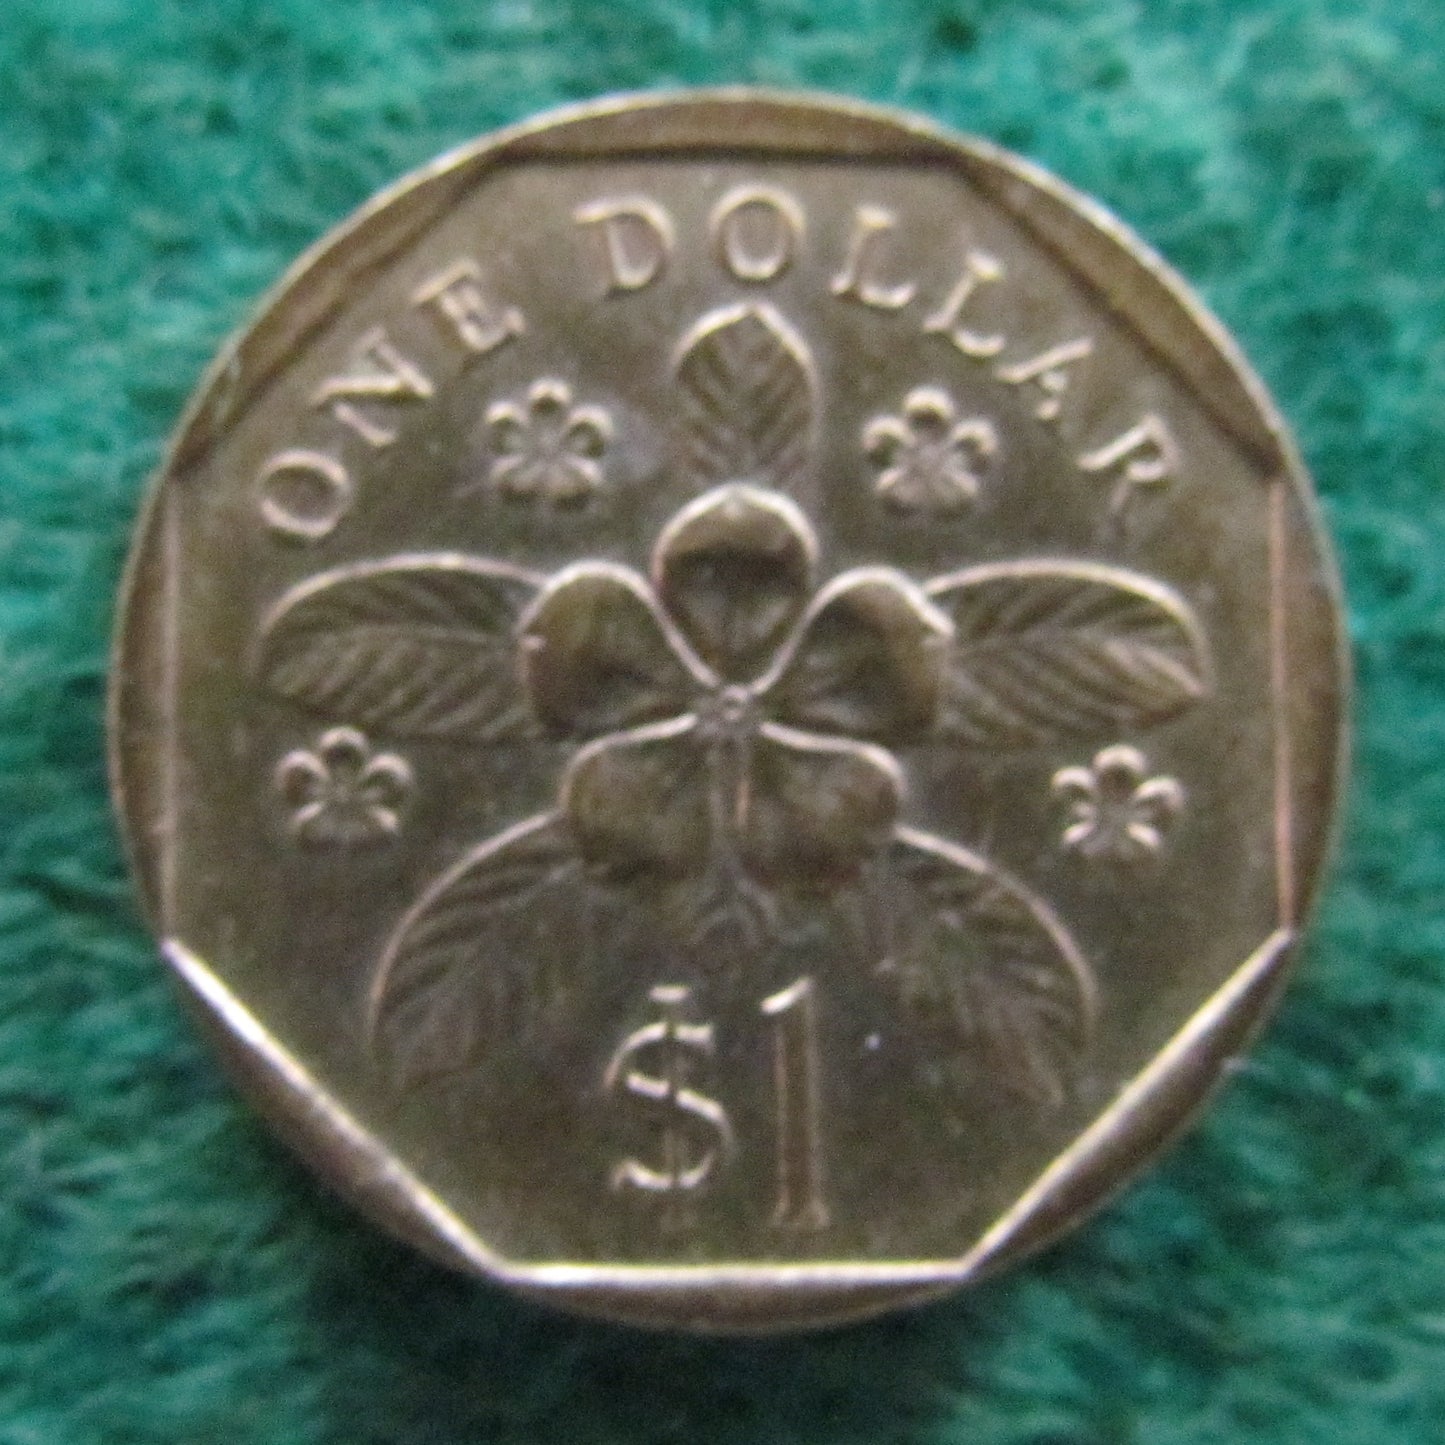 Singapore 1987 1 Dollar Coin